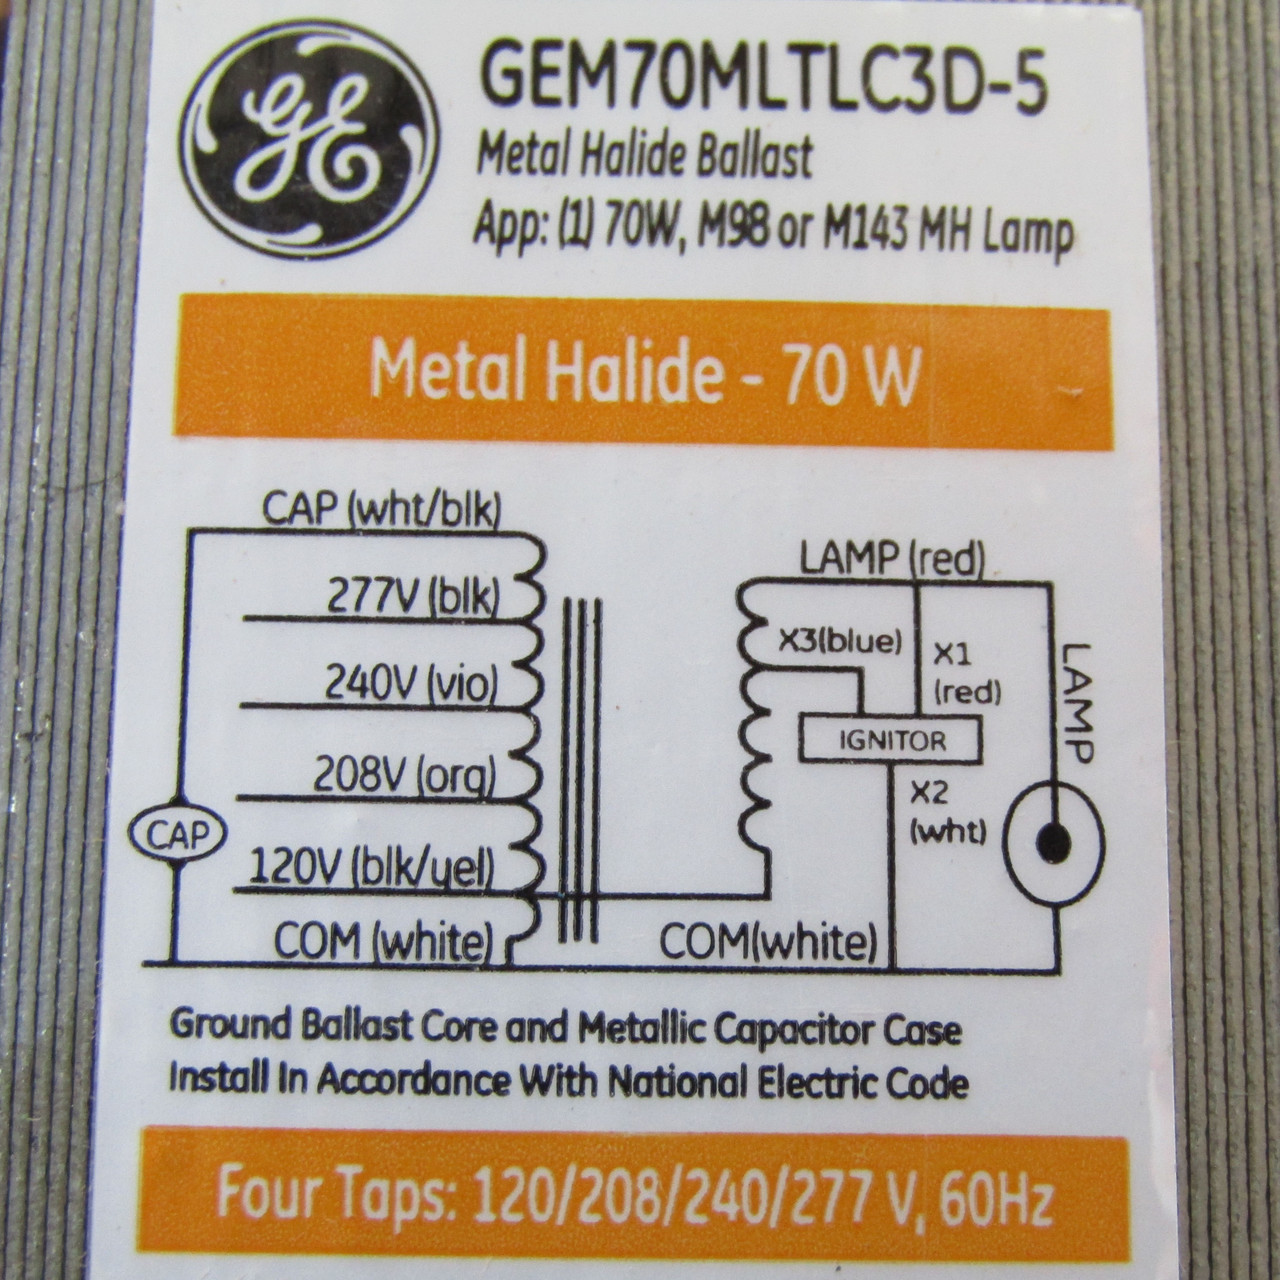 GE GEM70MLTLC3D-5 86847 Metal Halide Ballast 70W 120/208/240/277V - New 